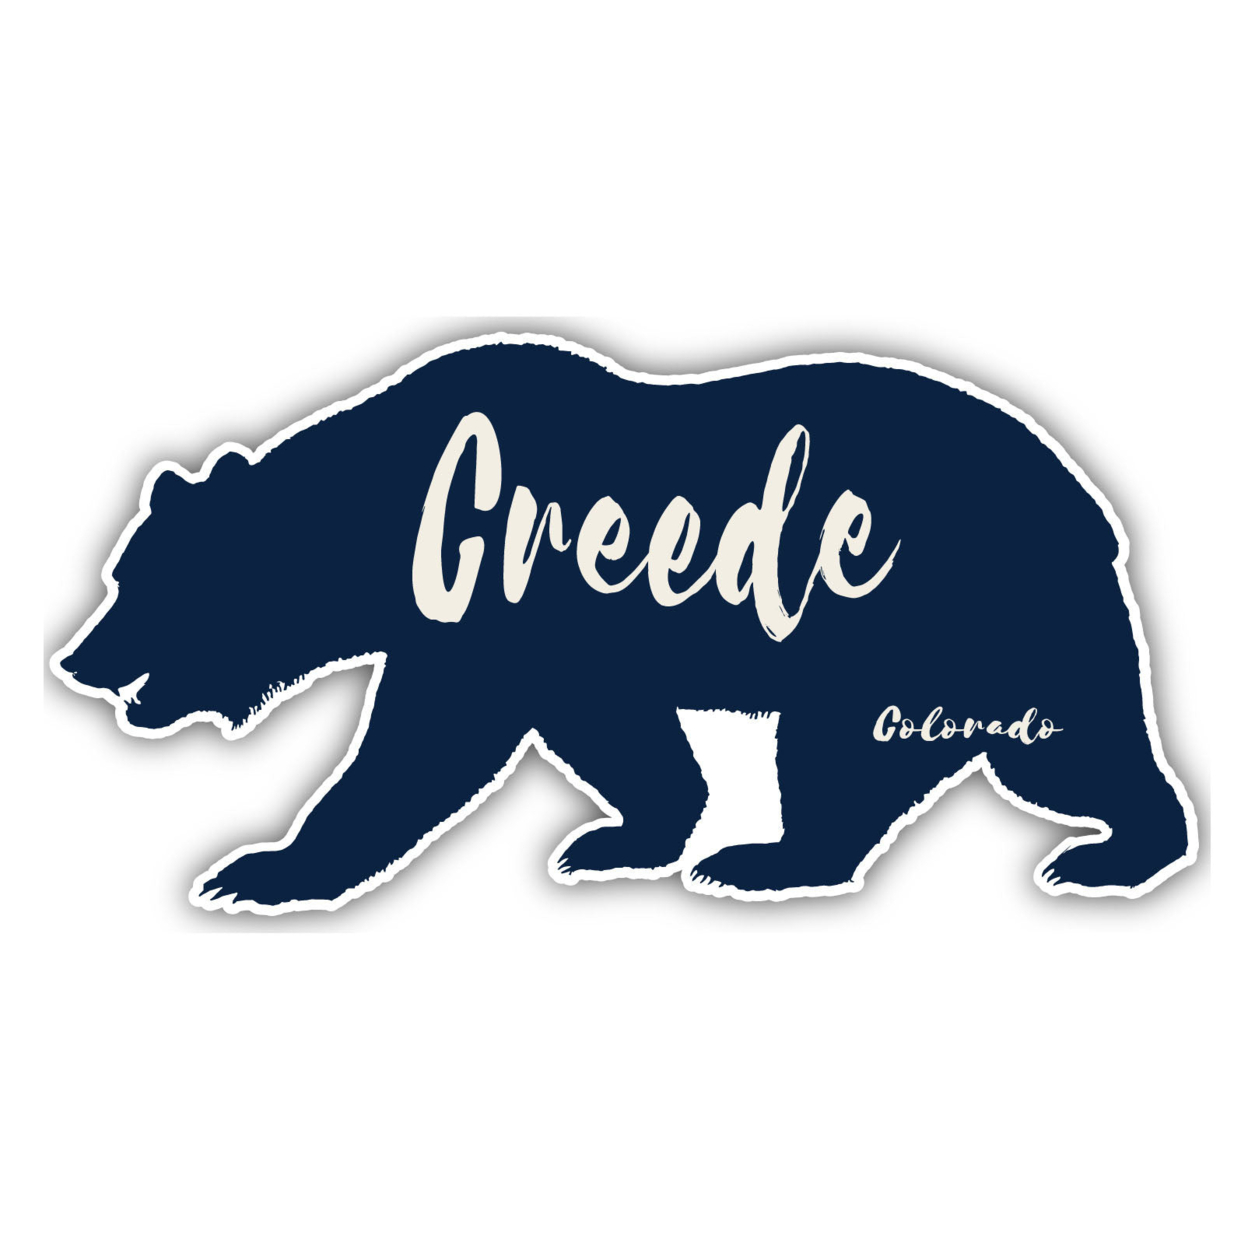 Creede Colorado Souvenir Decorative Stickers (Choose Theme And Size) - Single Unit, 8-Inch, Tent